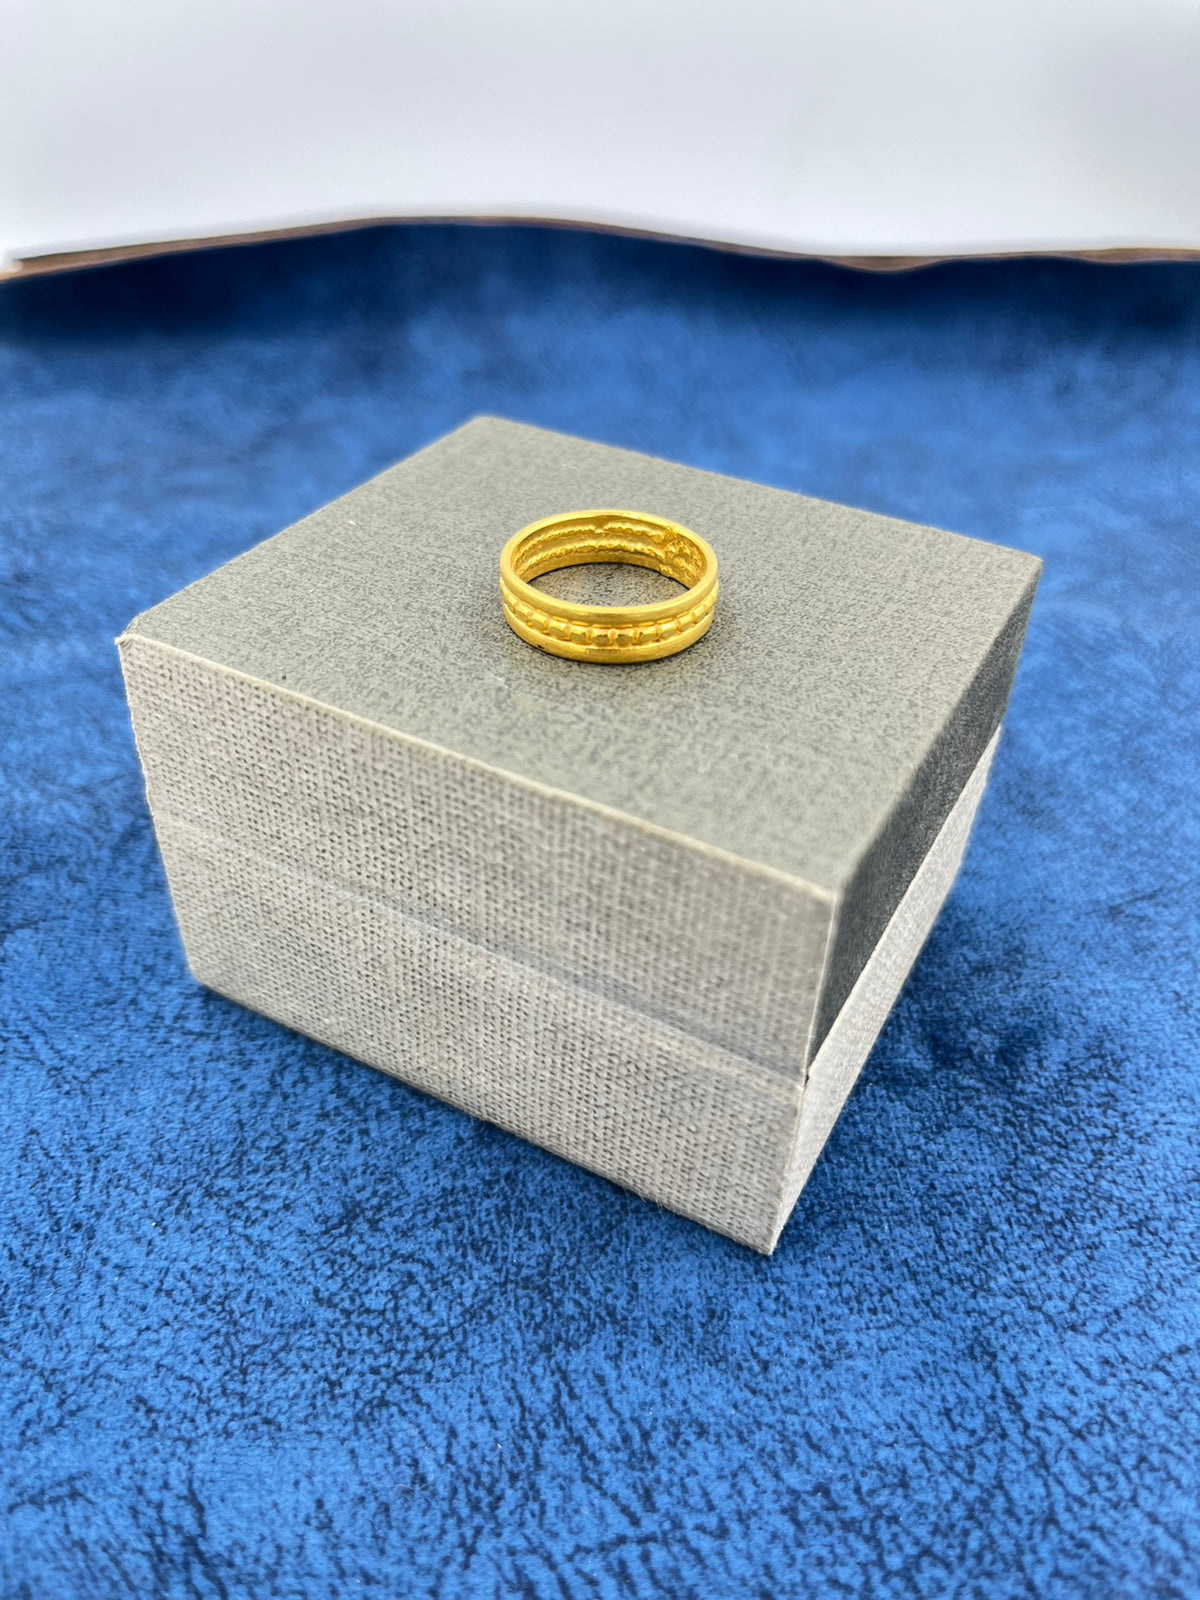 Powerful Gold Men's Ring